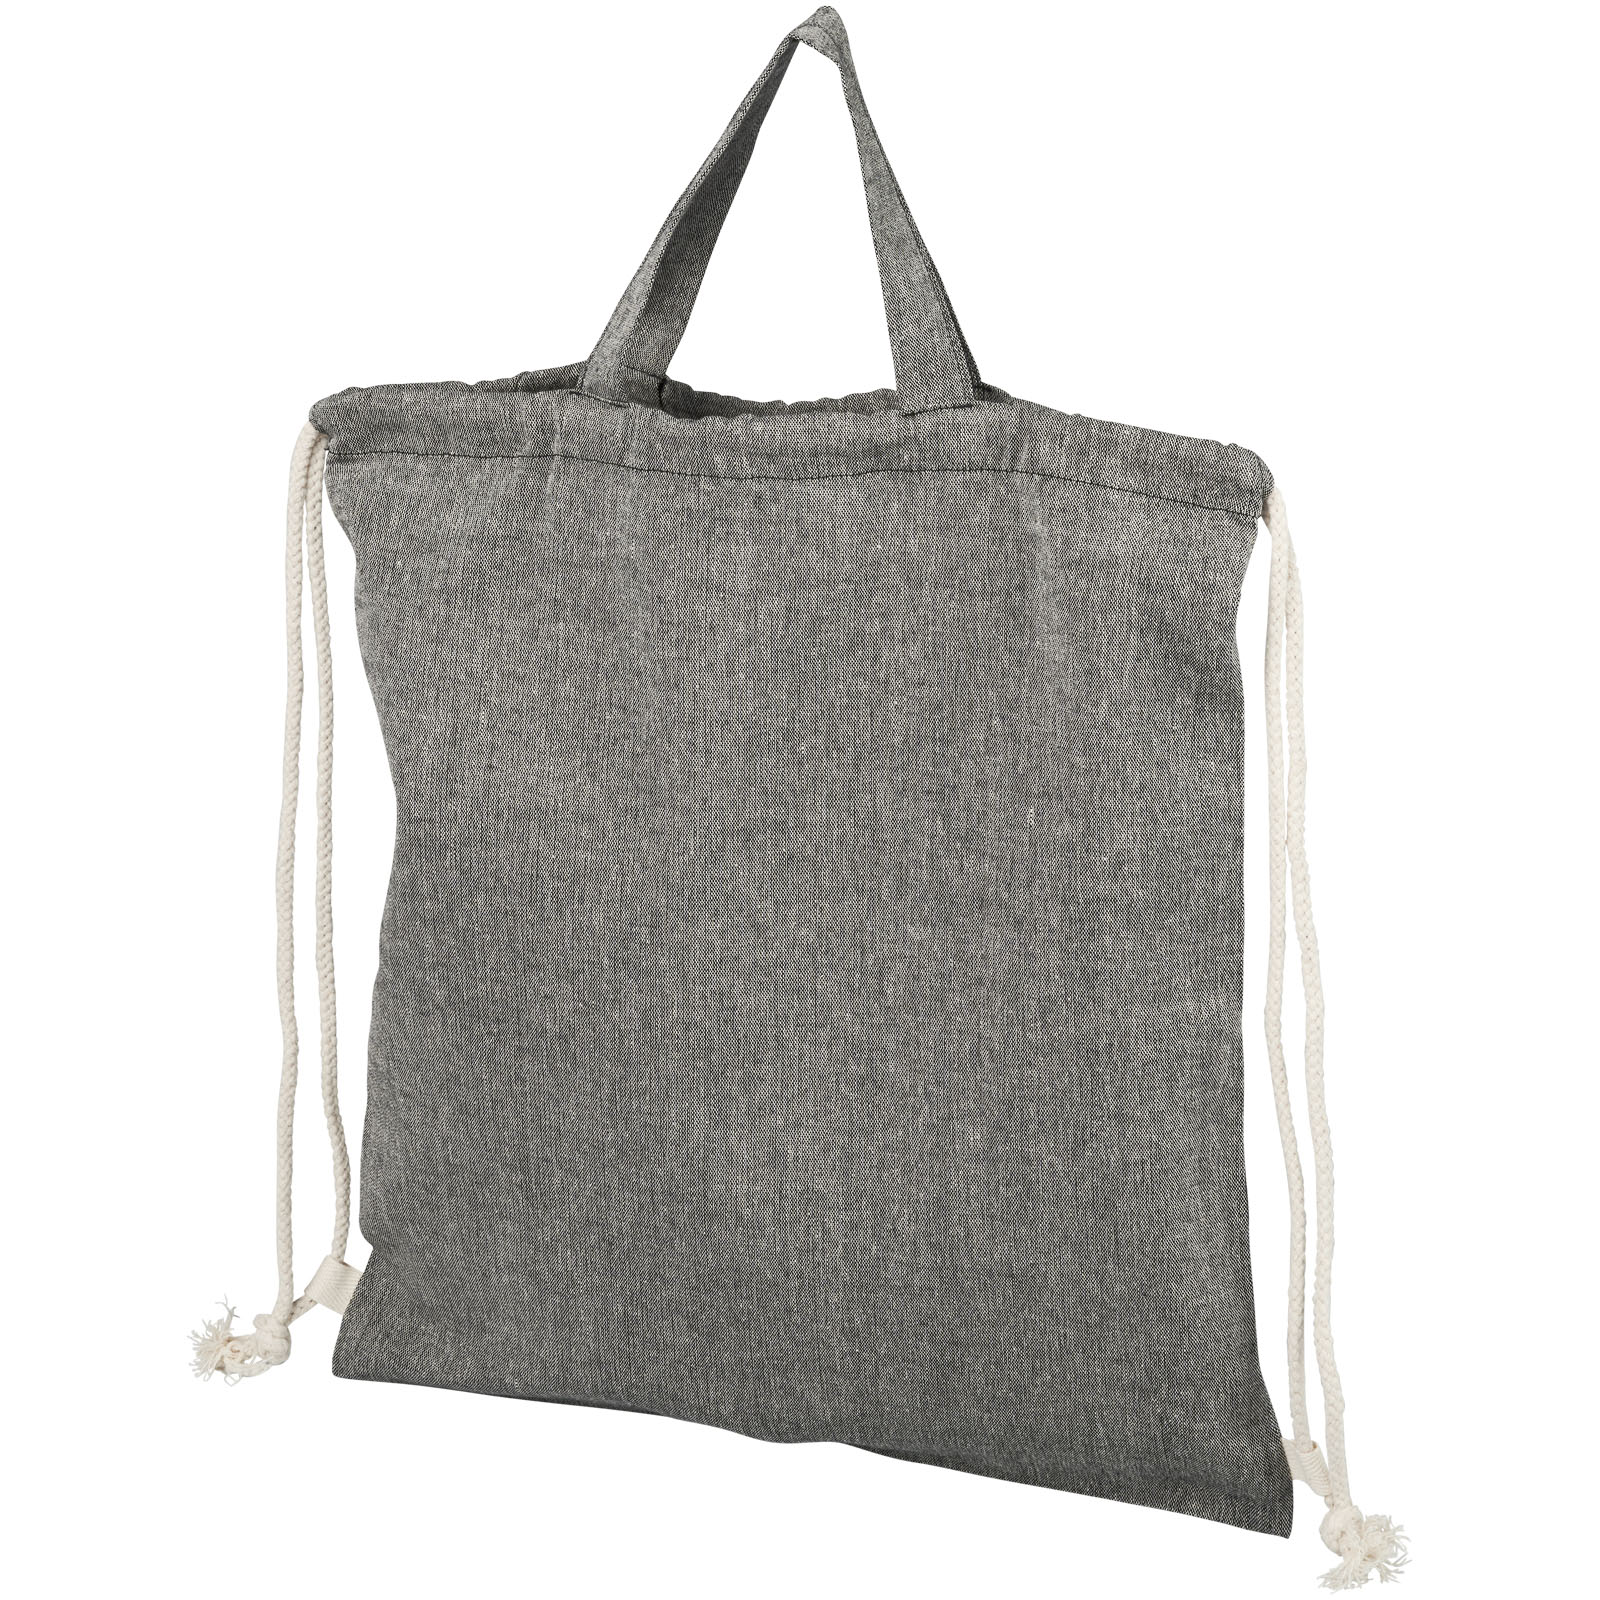 Drawstring Bags - Pheebs 150 g/m² recycled drawstring bag 6L